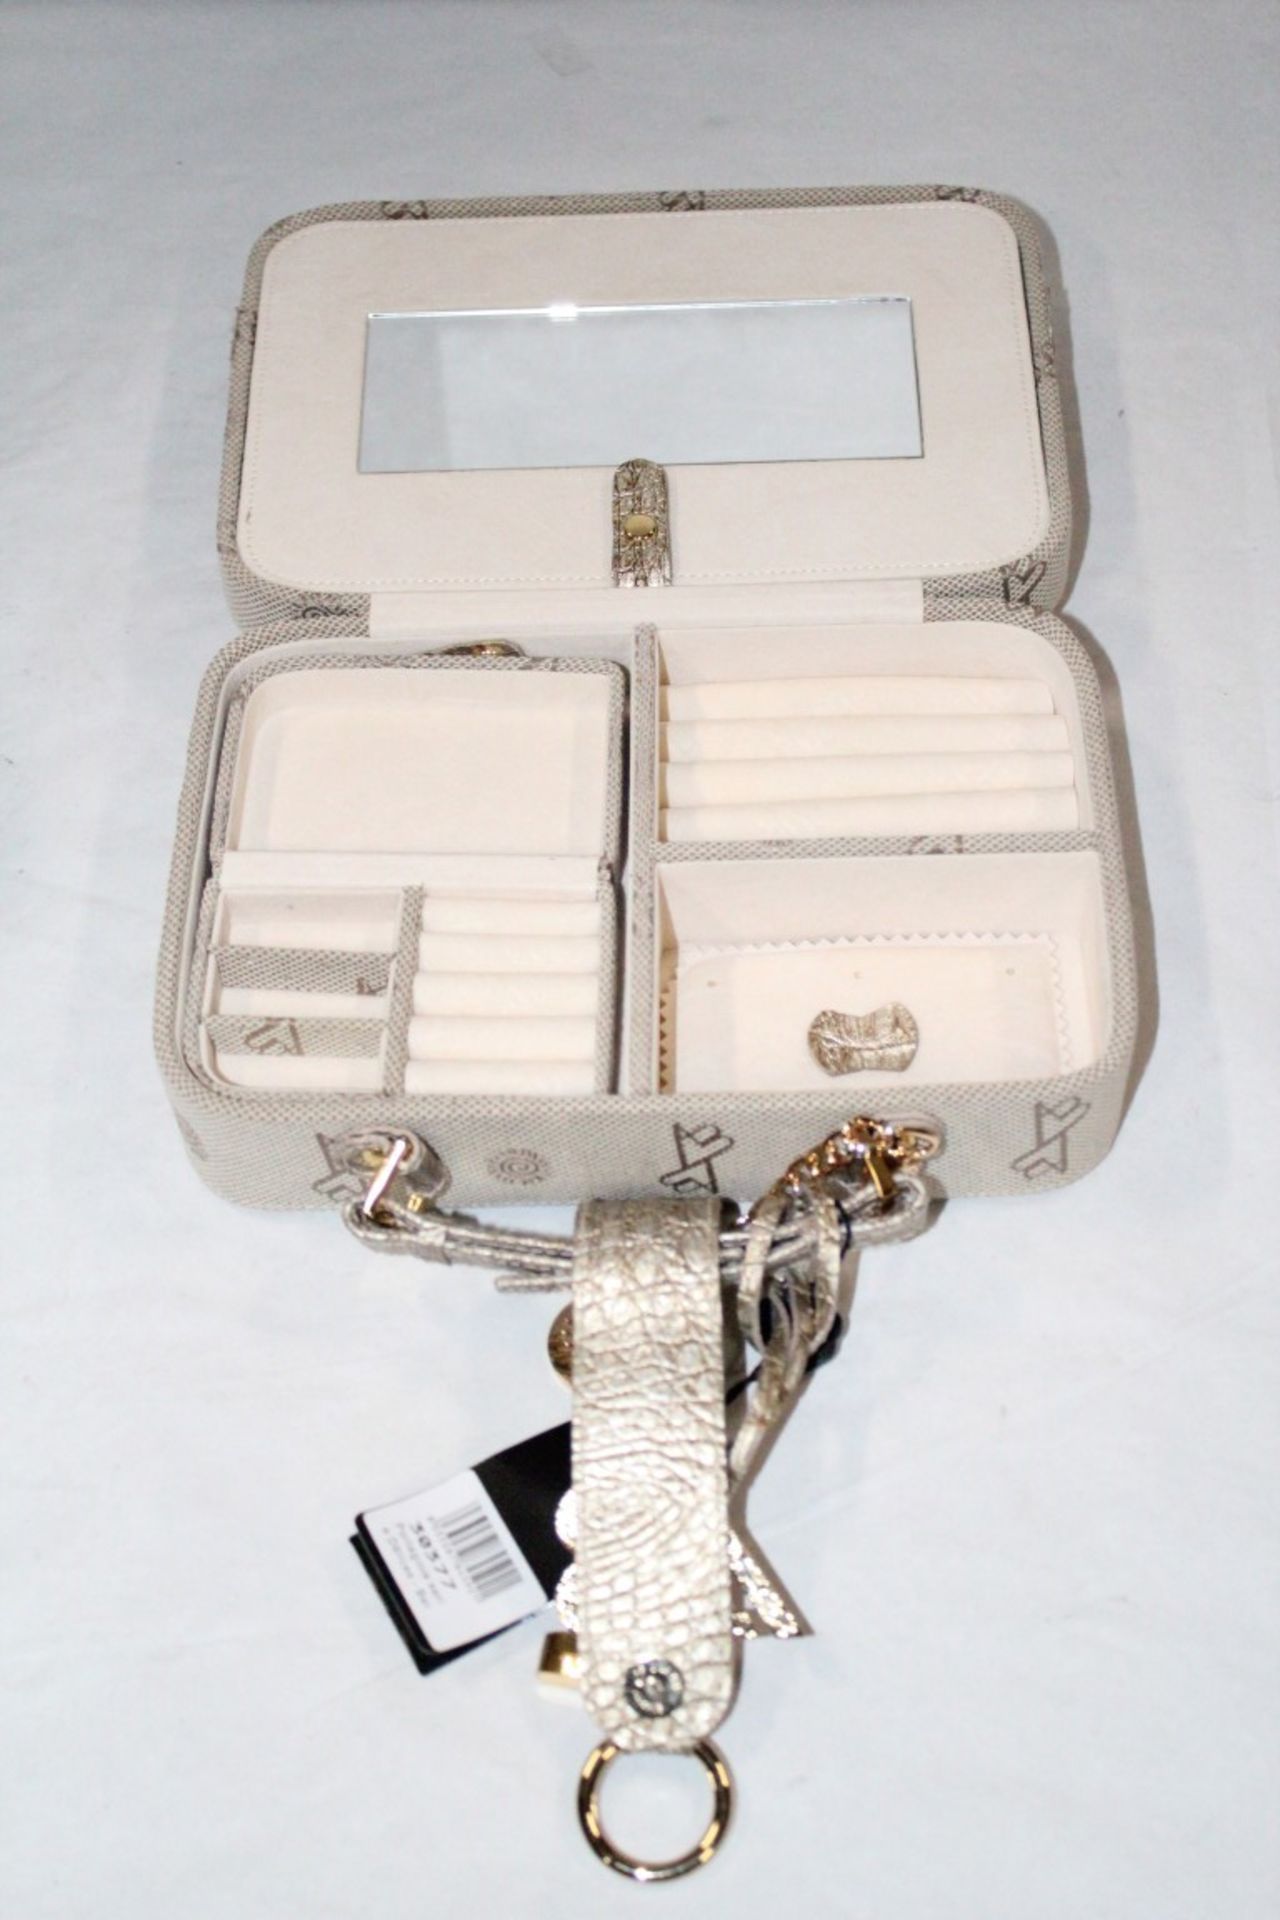 1 x "AB Collezioni" Italian Luxury Jewellery Case (30377) - Ref LT121 – Features Travel Case & Top - Image 3 of 4